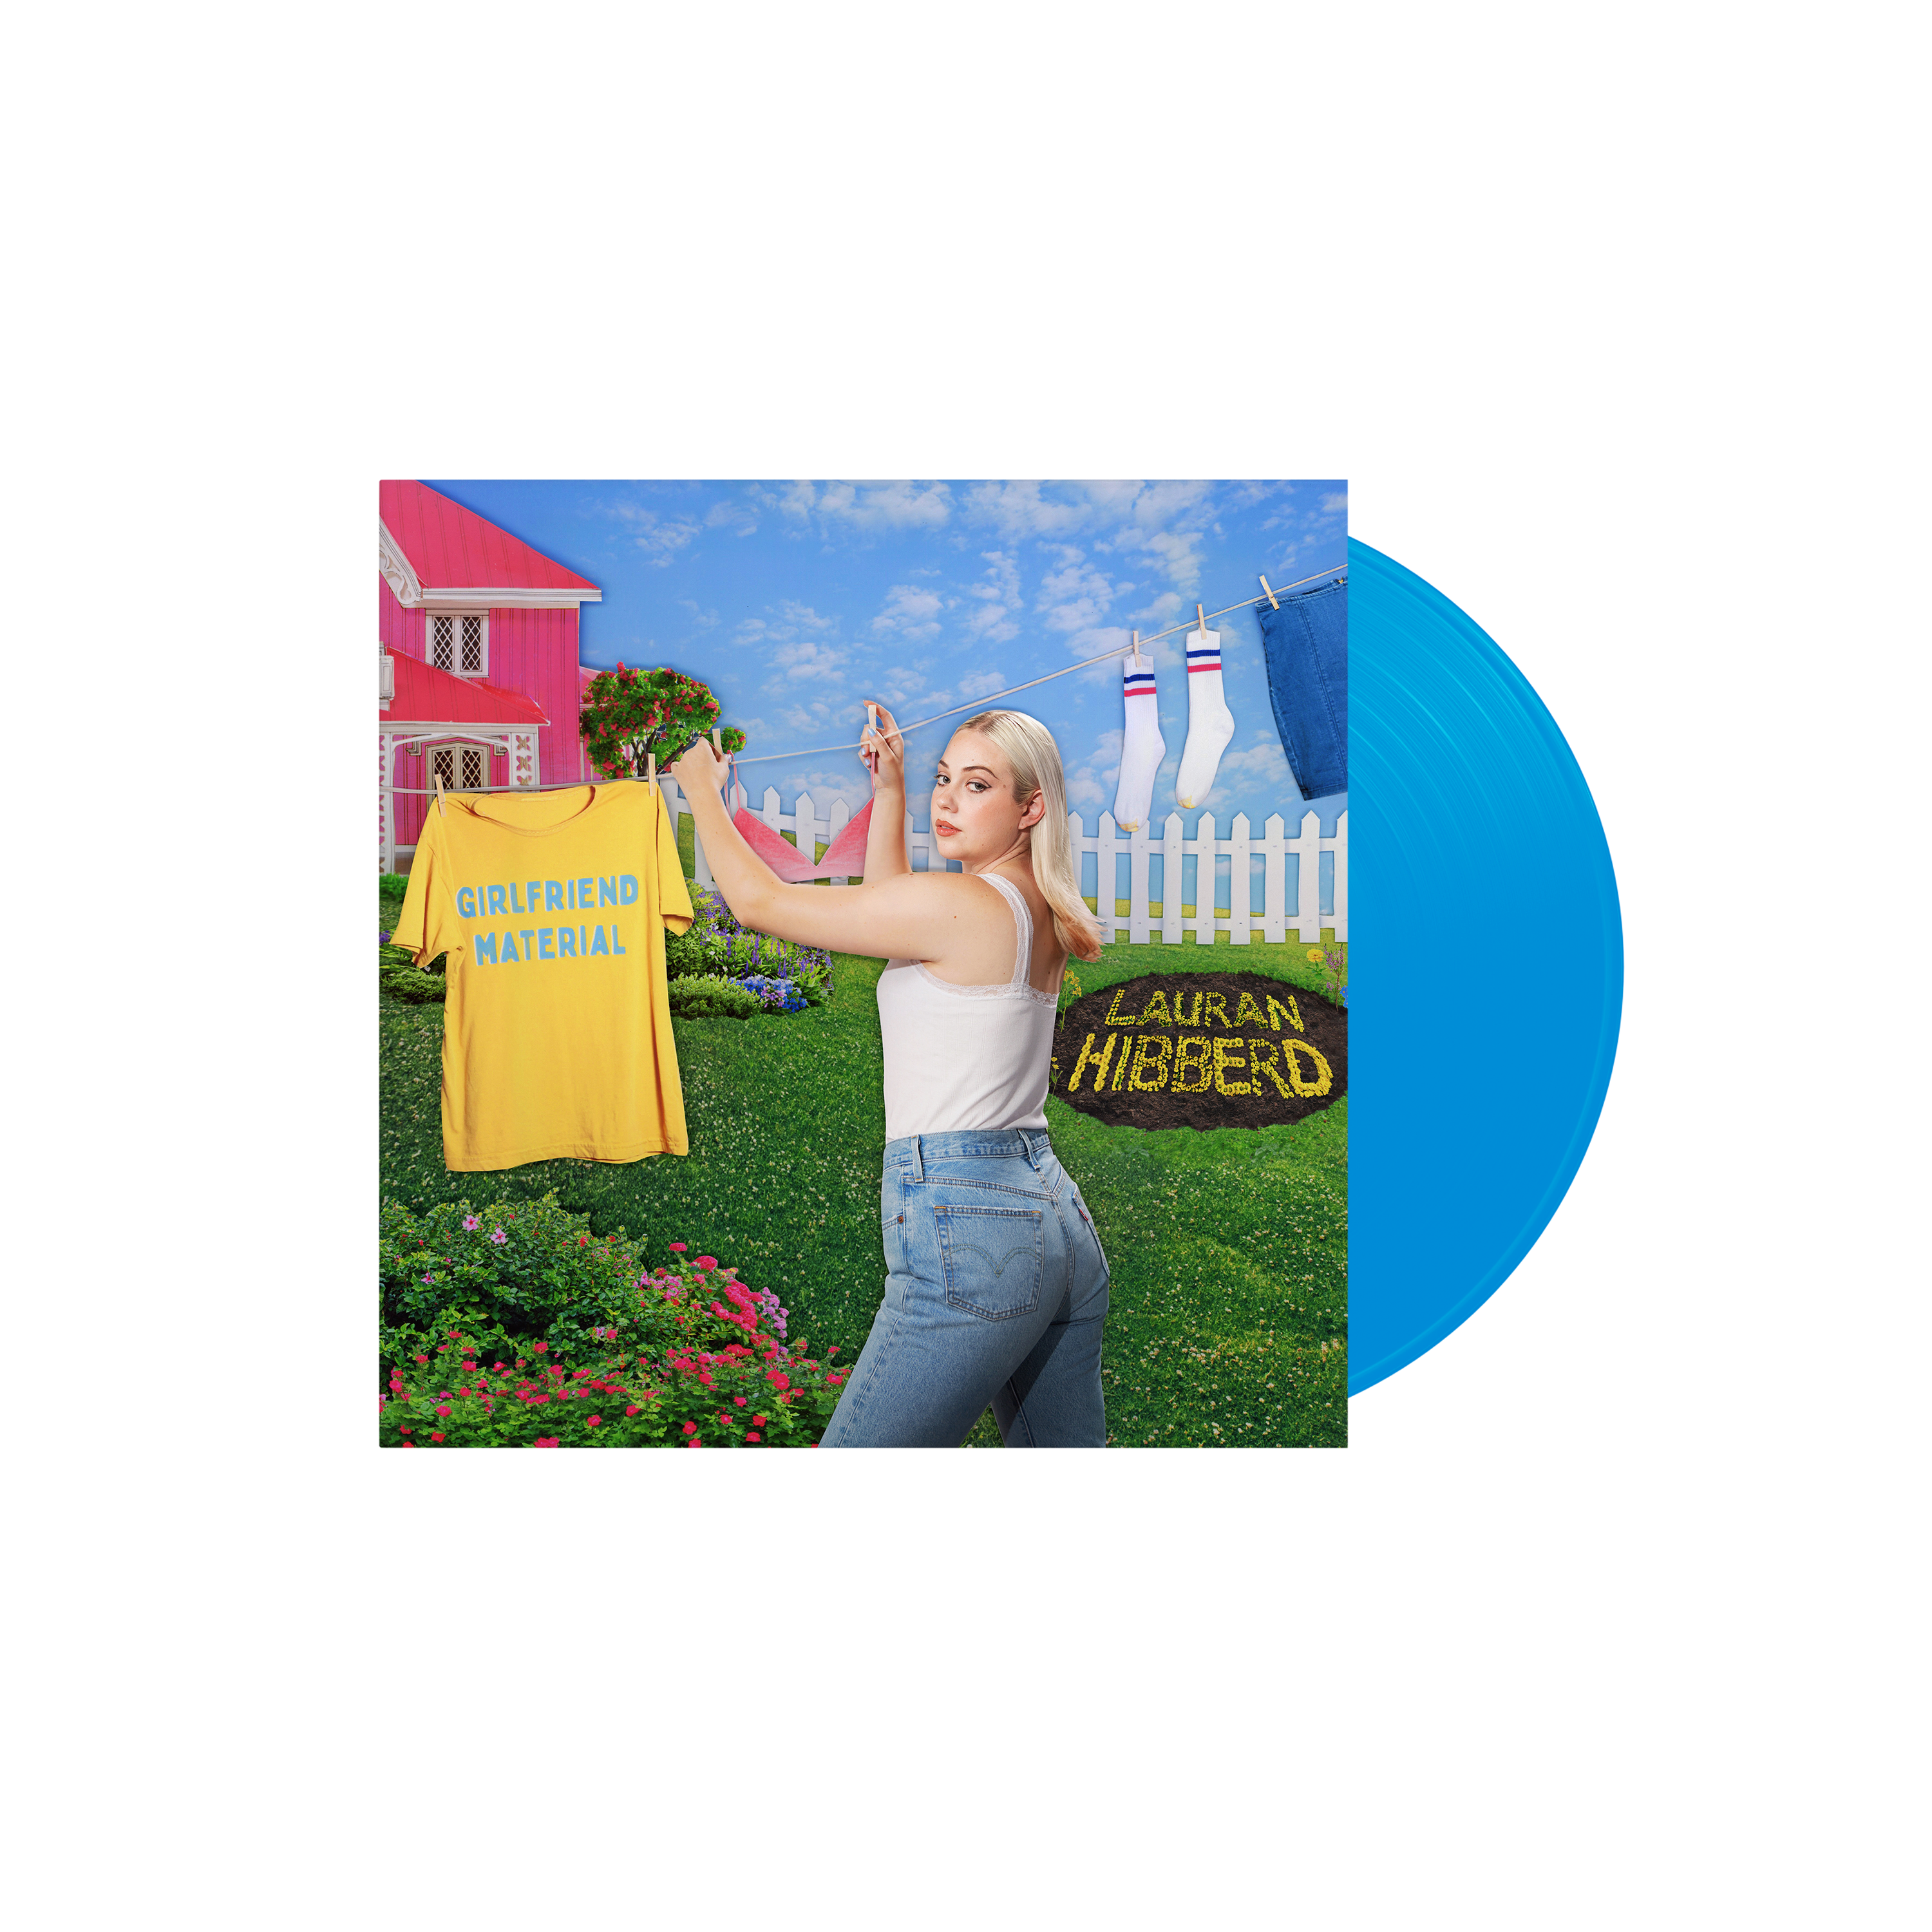 Lauran Hibberd - girlfriend material: Sky Blue Vinyl LP